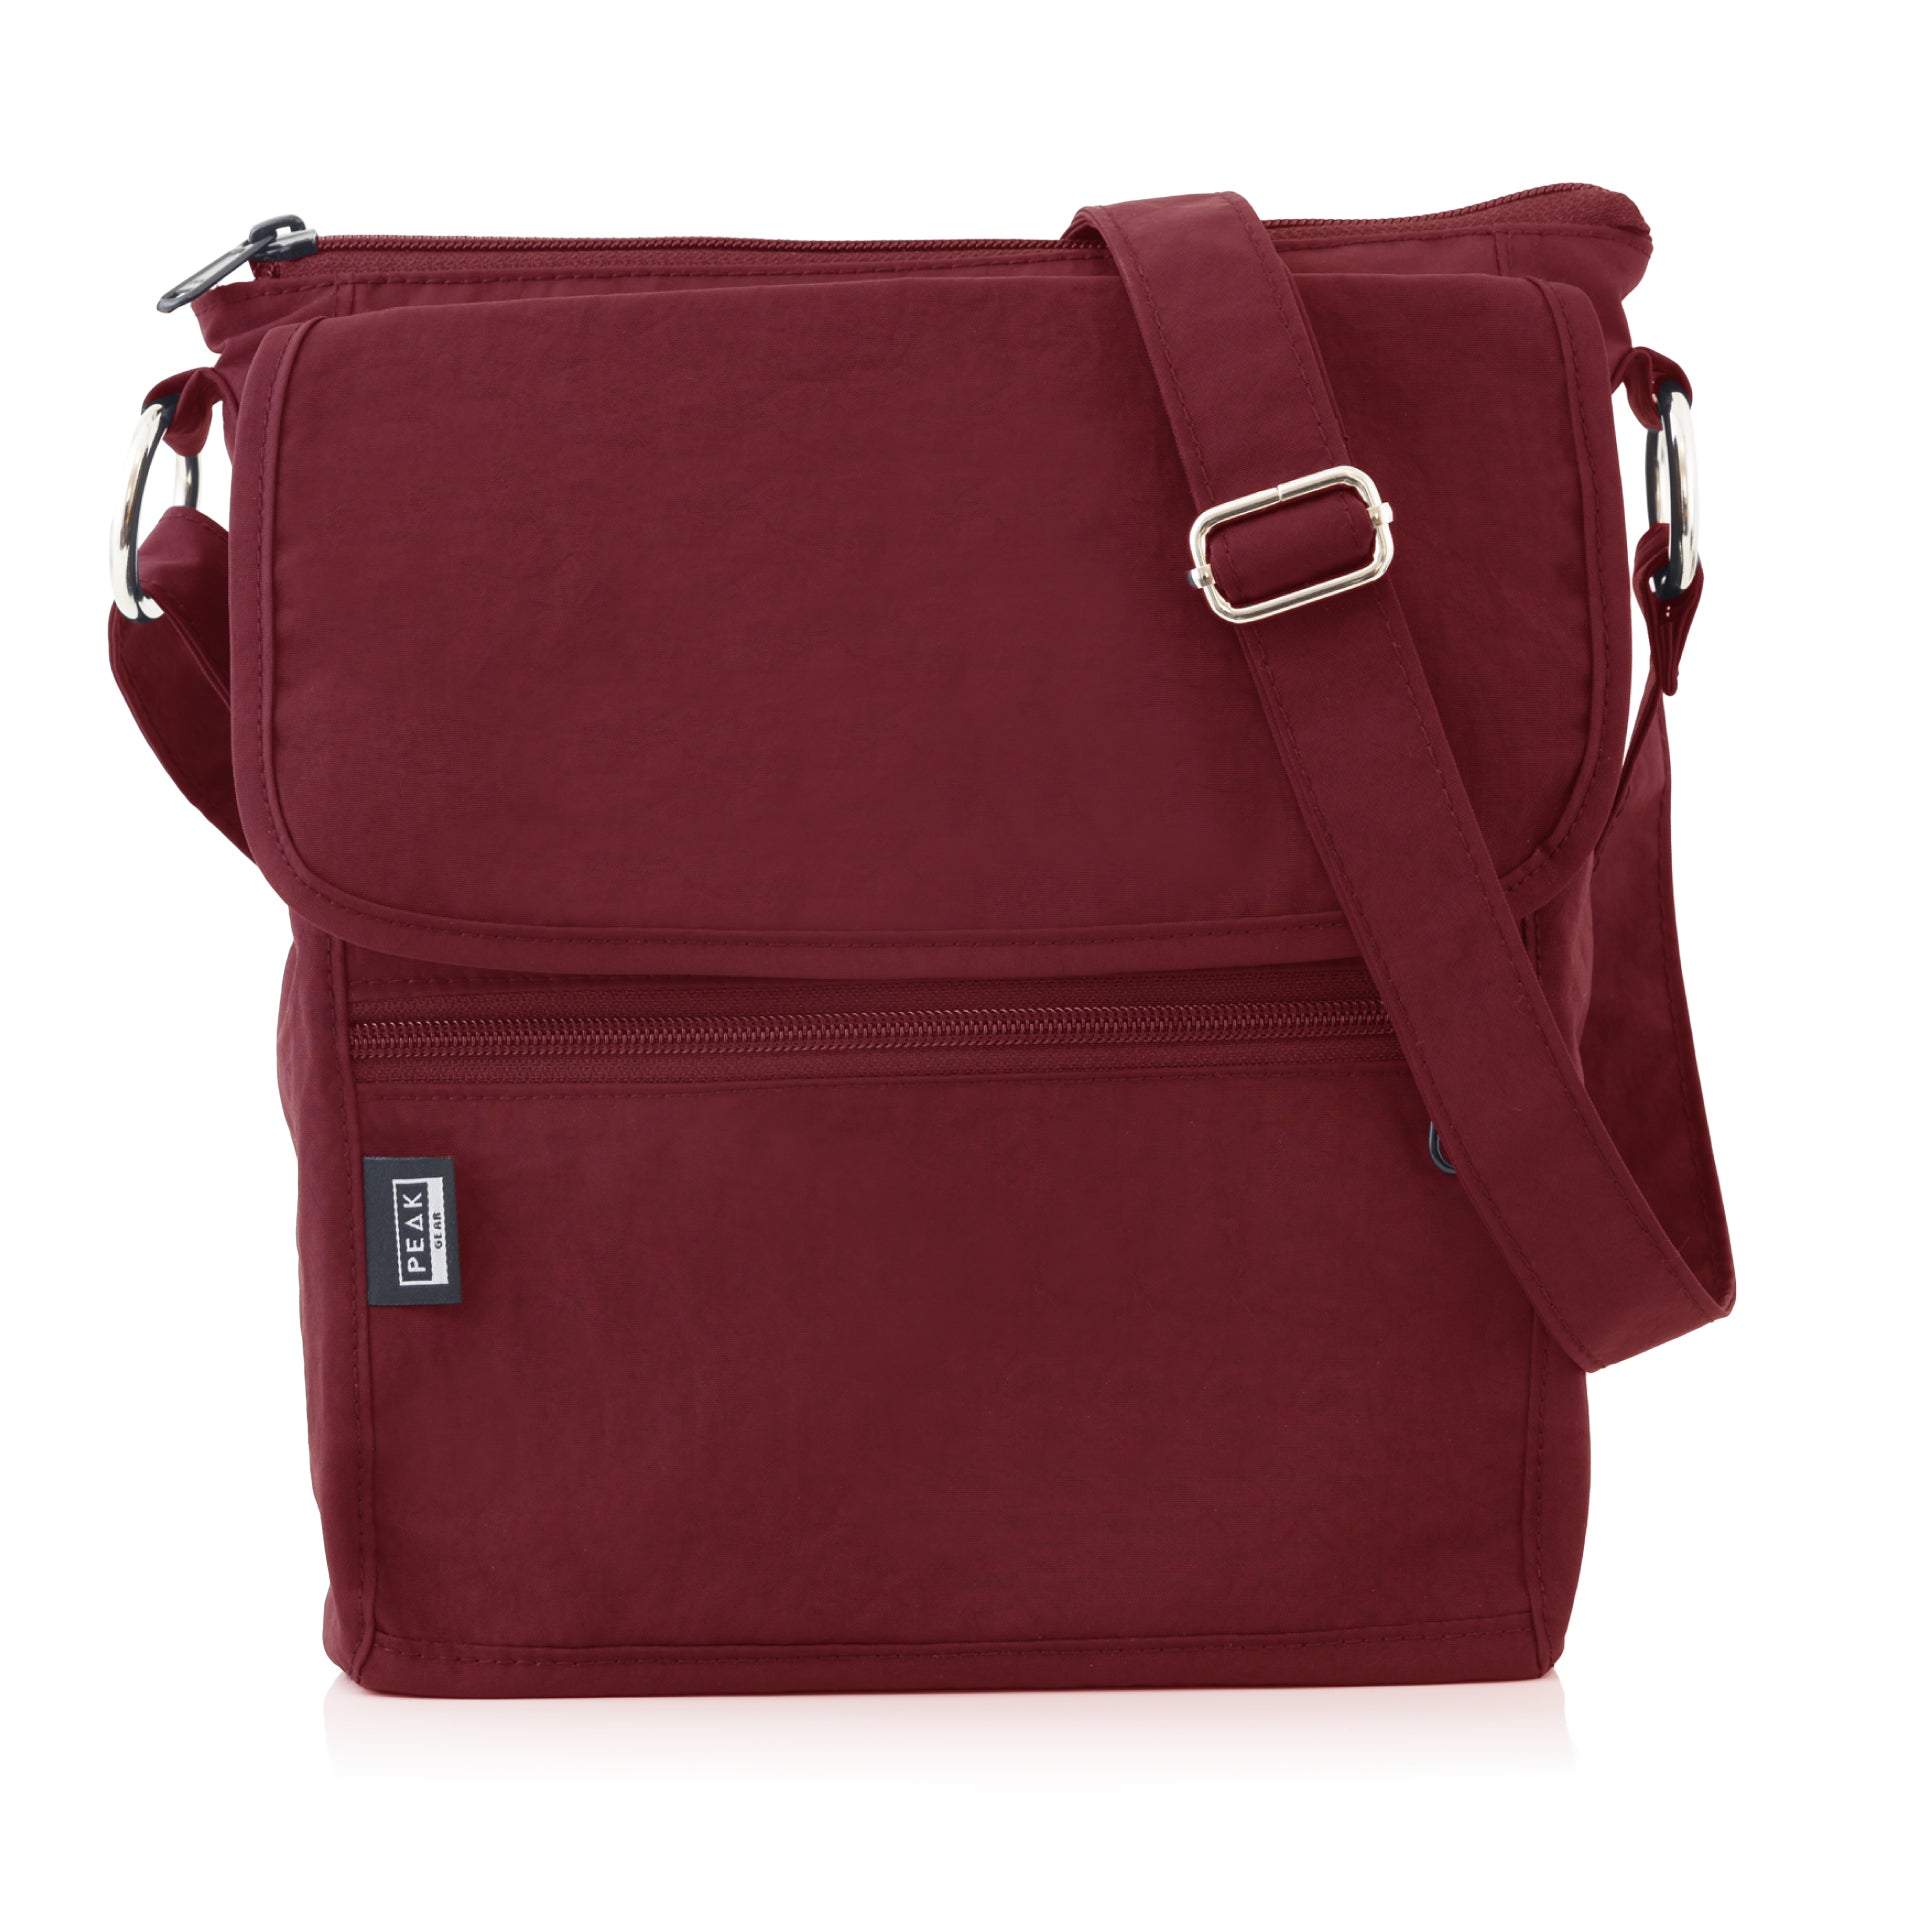 Tumi Brown Nylon Crossbody Bag Purse | eBay